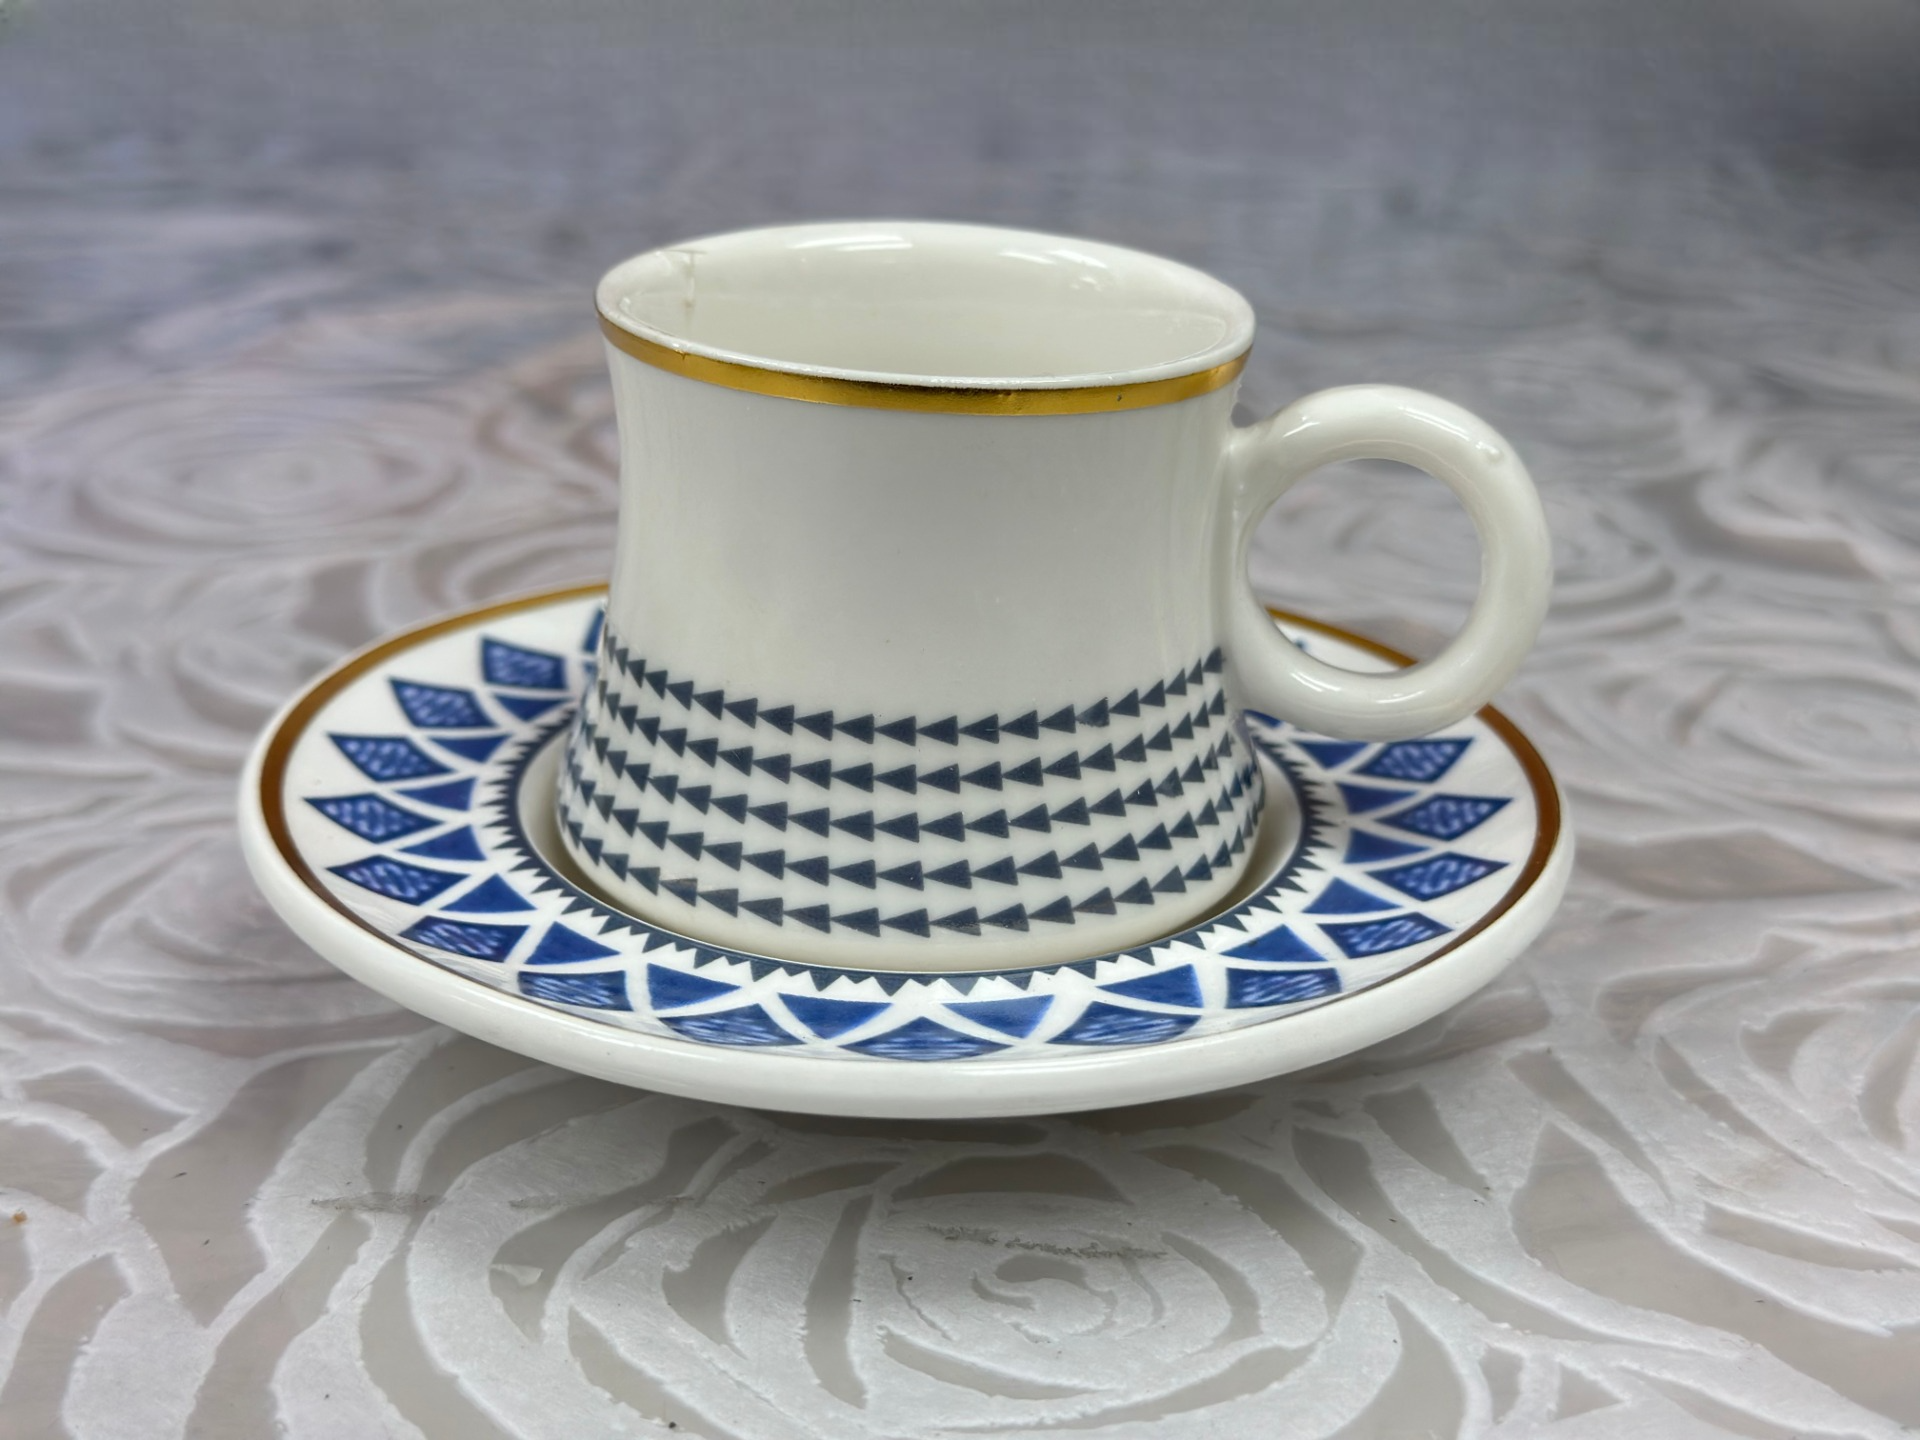 Arabic and Turkish coffee cups